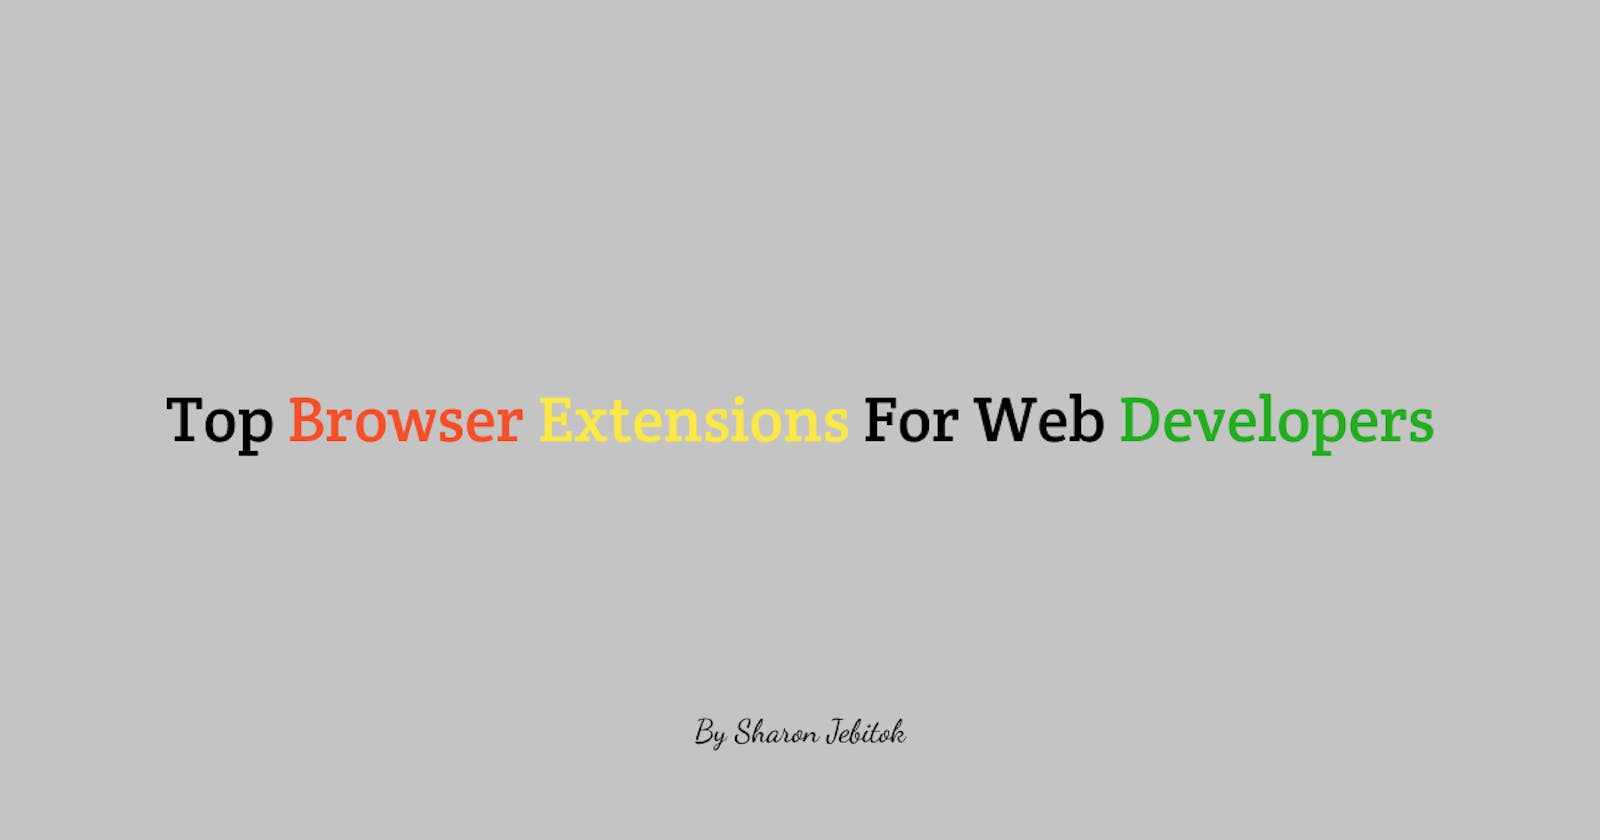 Top Chrome Extension for a Web Developer